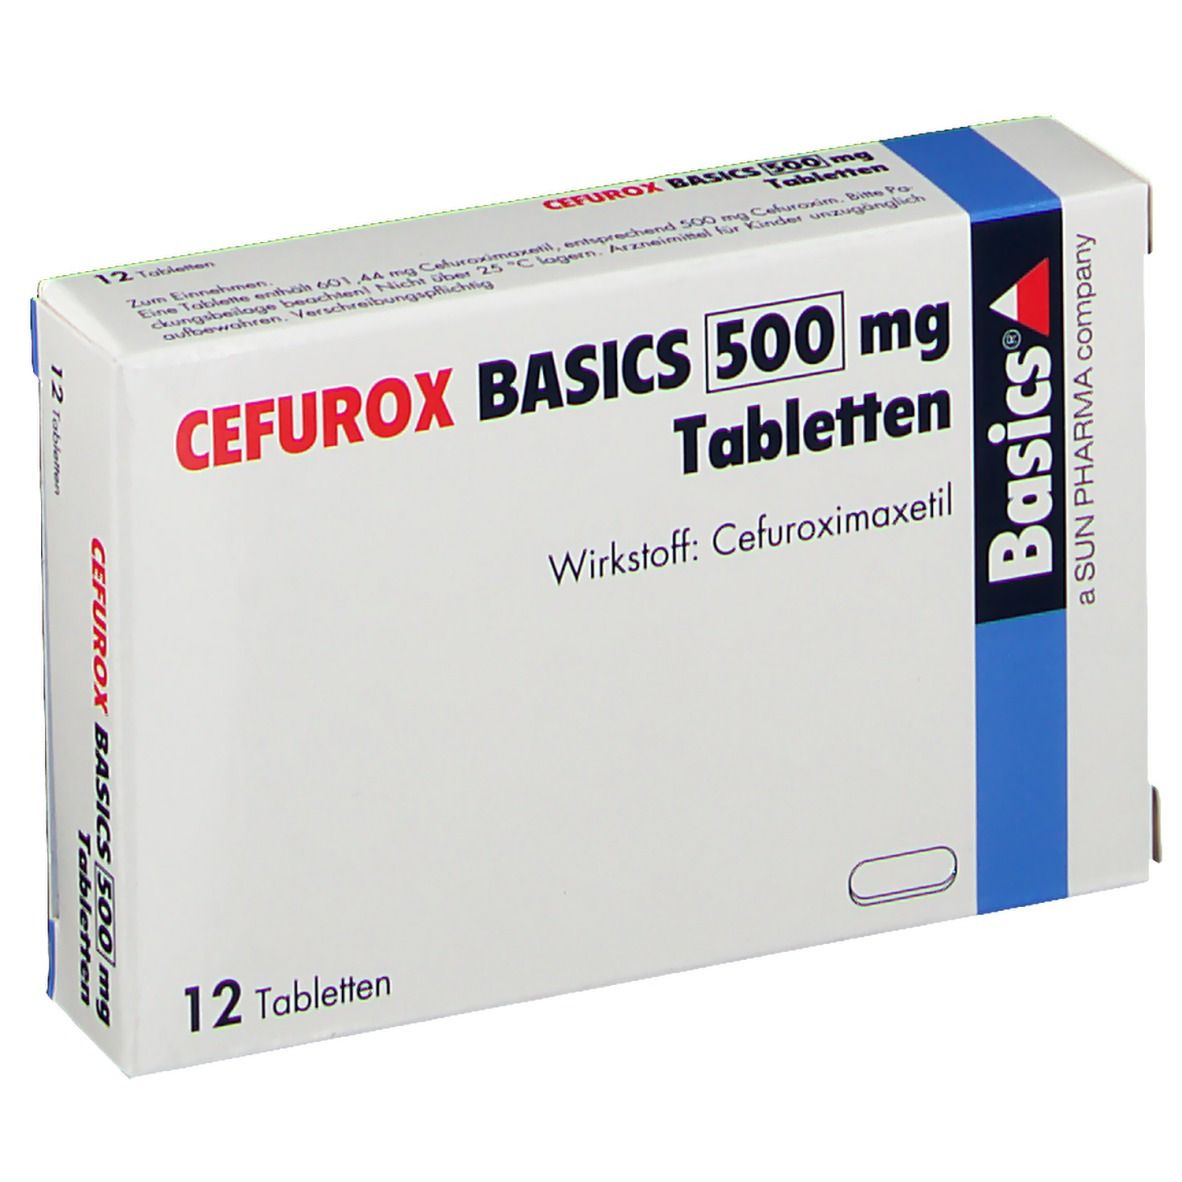 CEFUROX BASICS 500 mg.